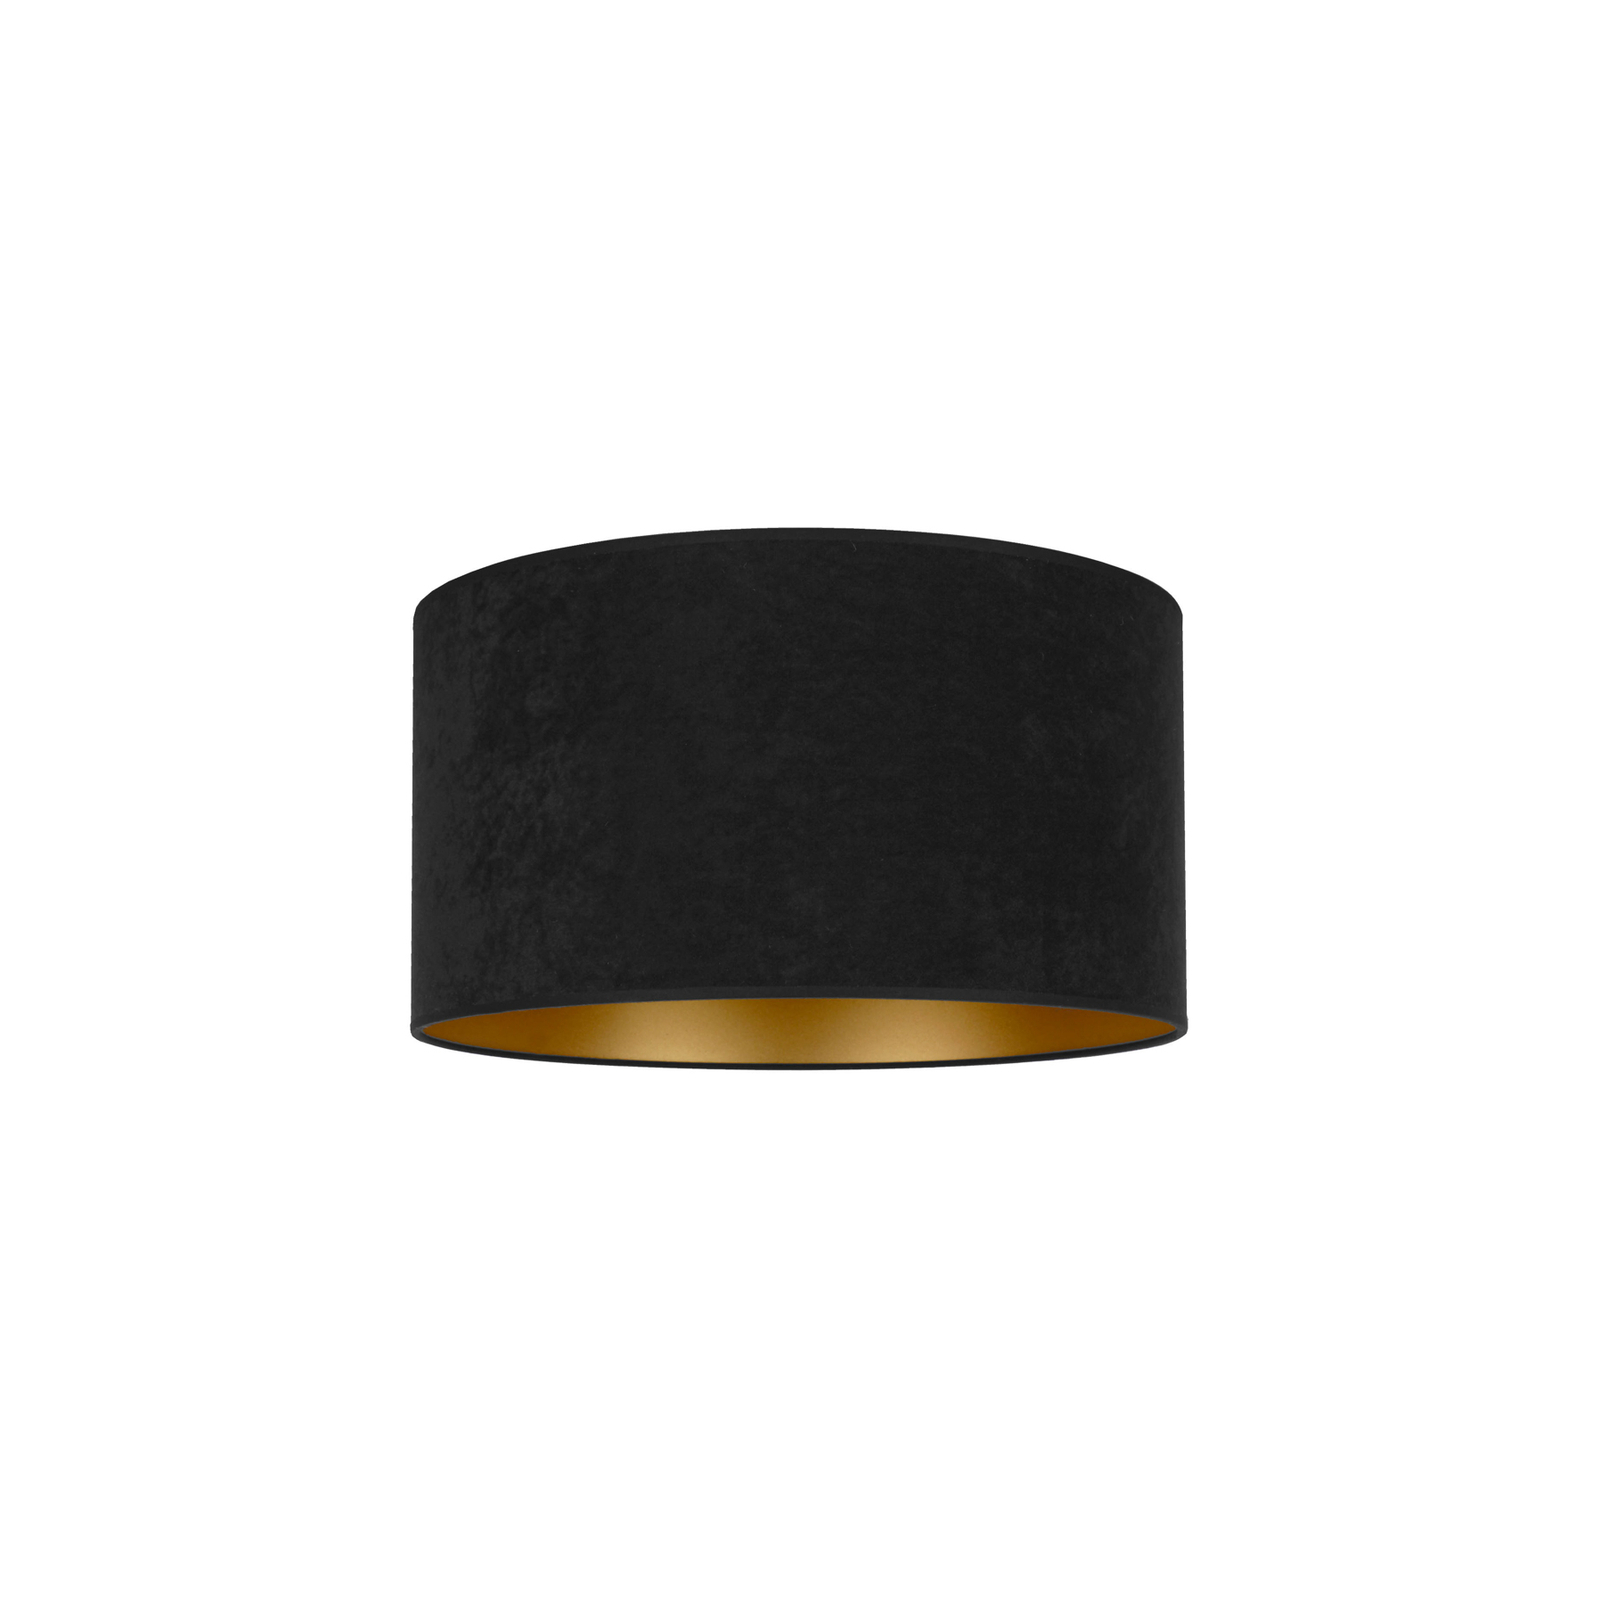 Lampa sufitowa Golden Roller Ø 40 cm czarna/złota